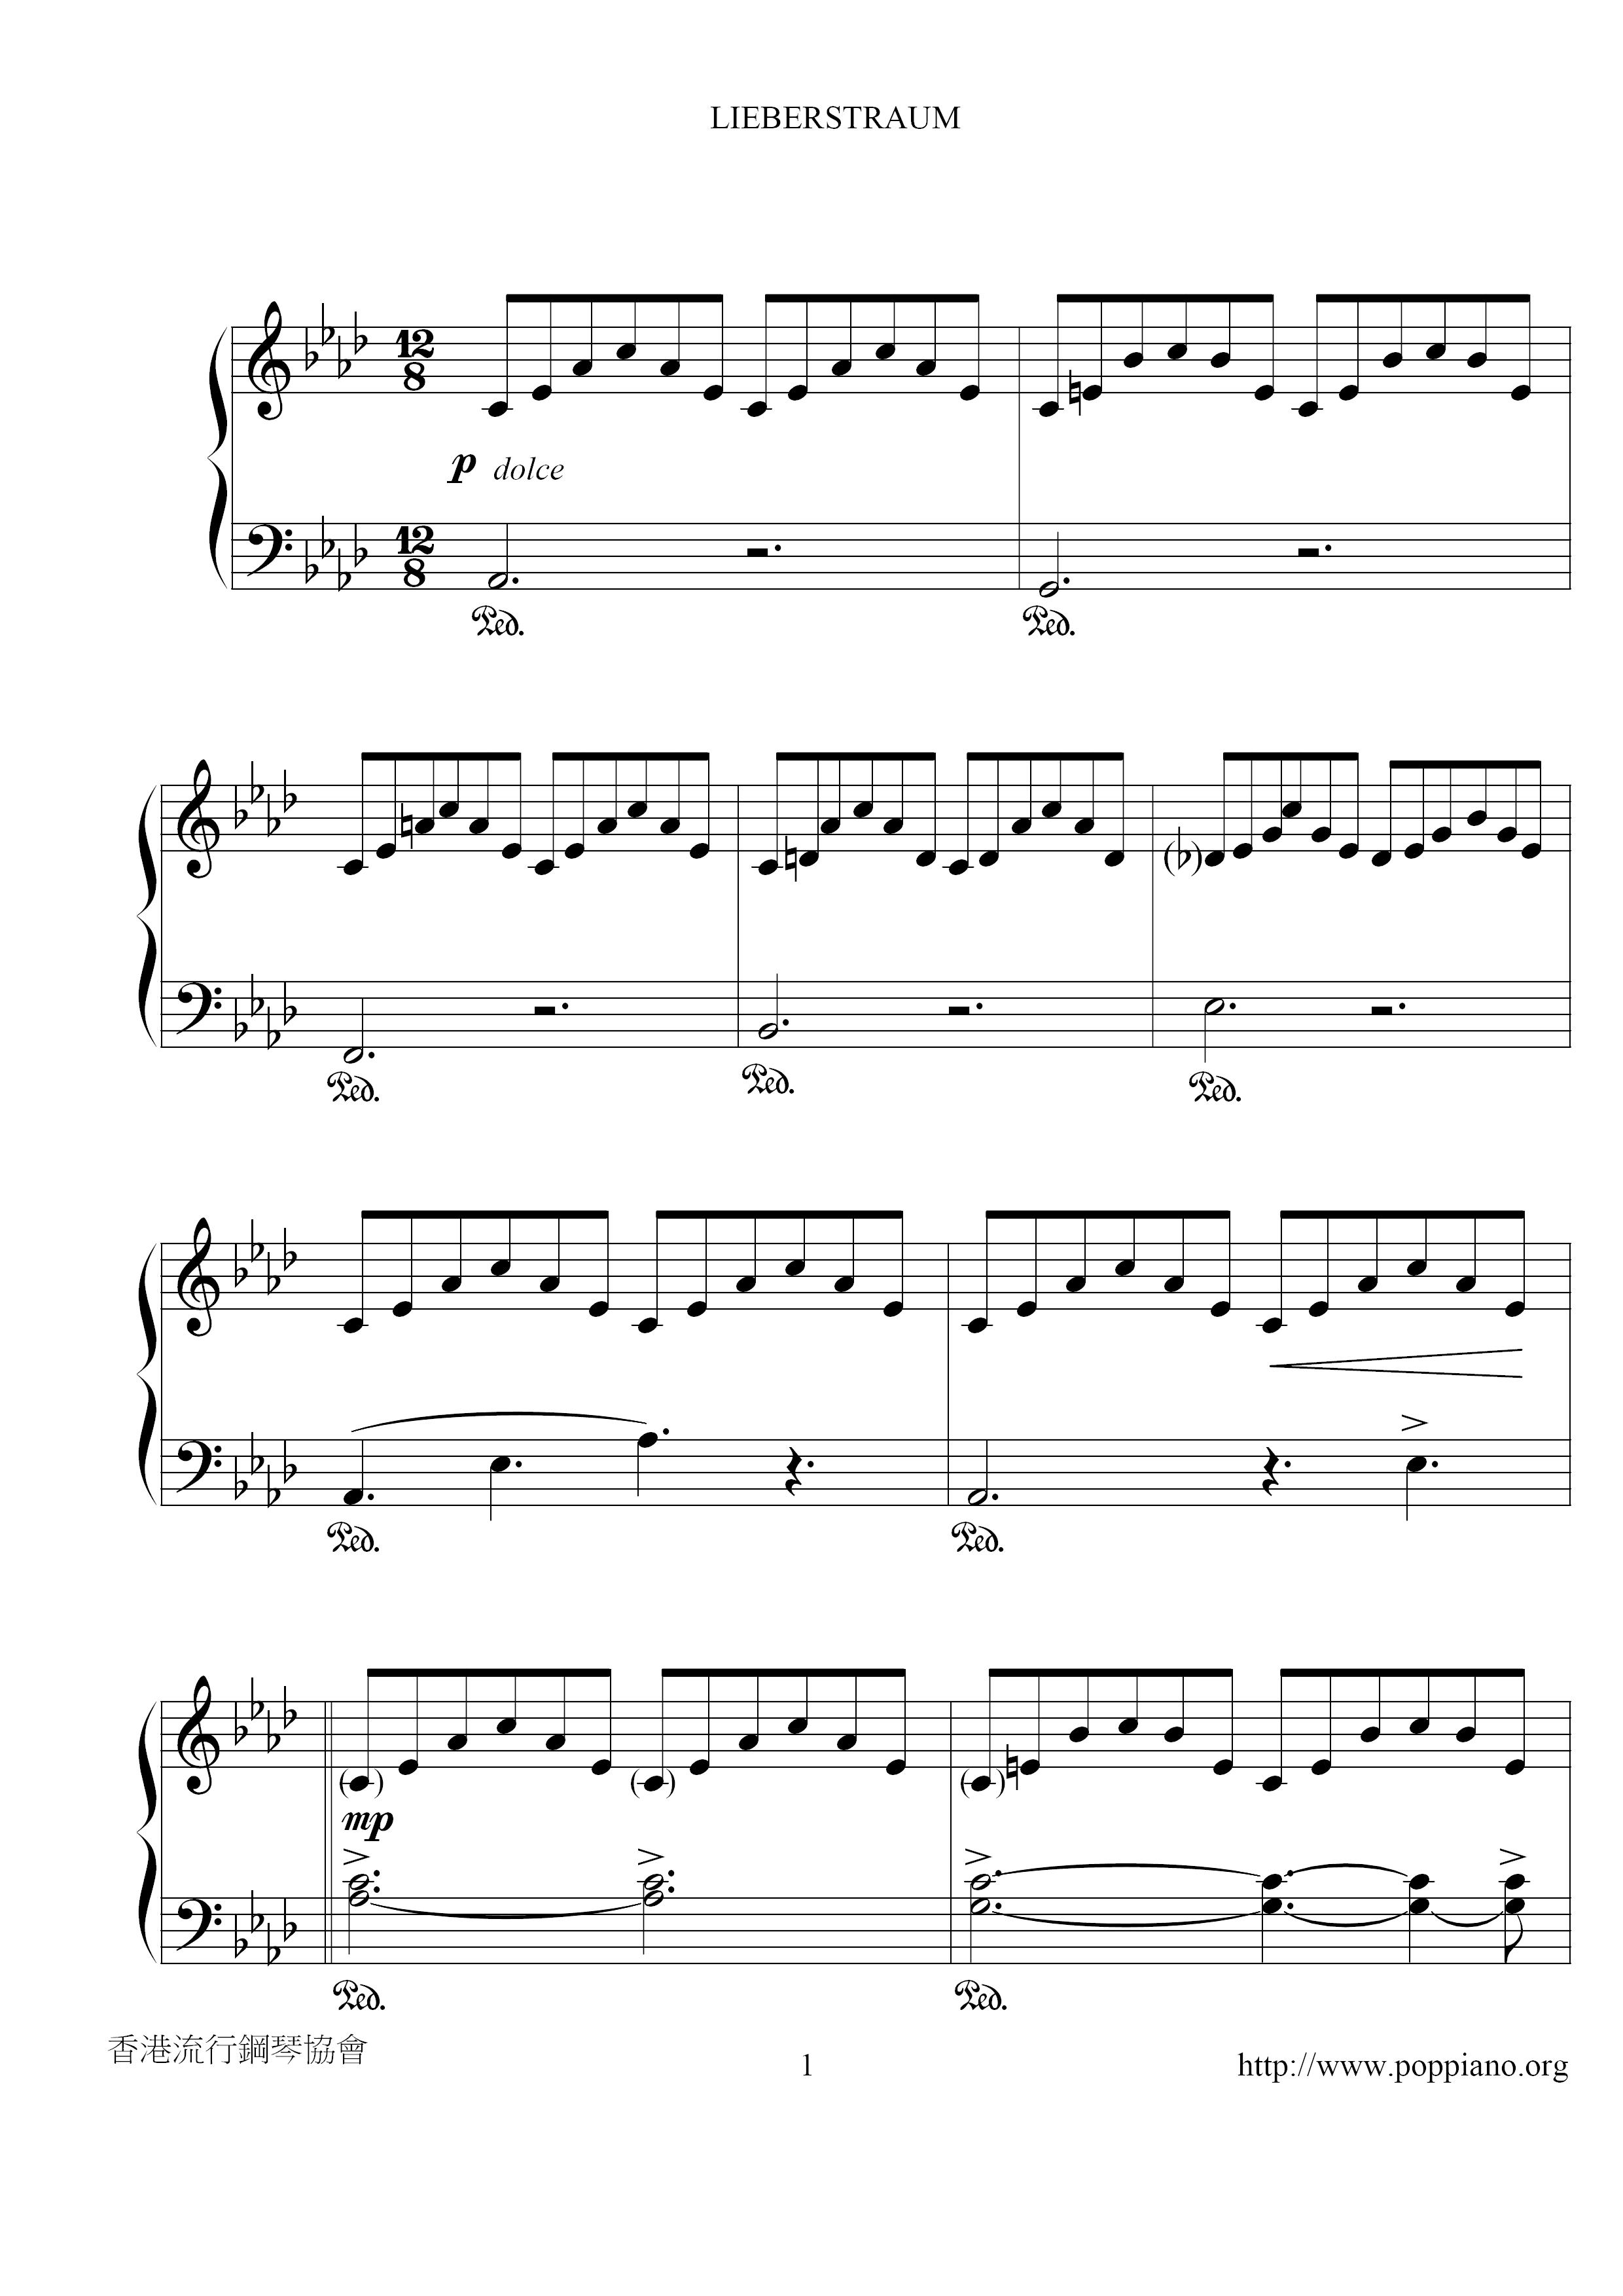 Liebestraum No. 3 in A-Flat Major, S. 541 / 3 Score